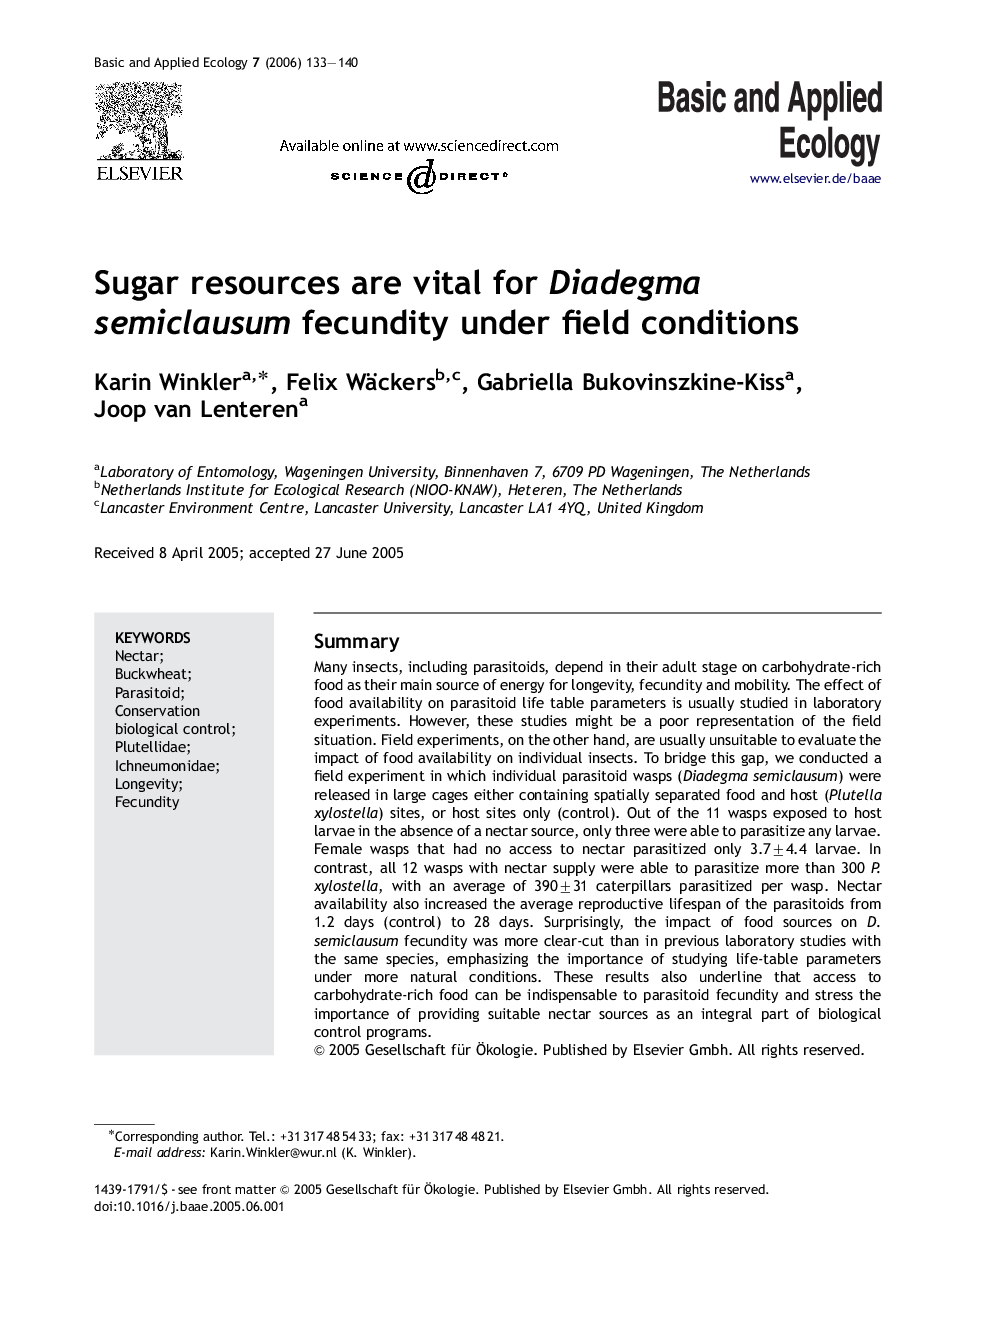 Sugar resources are vital for Diadegma semiclausum fecundity under field conditions